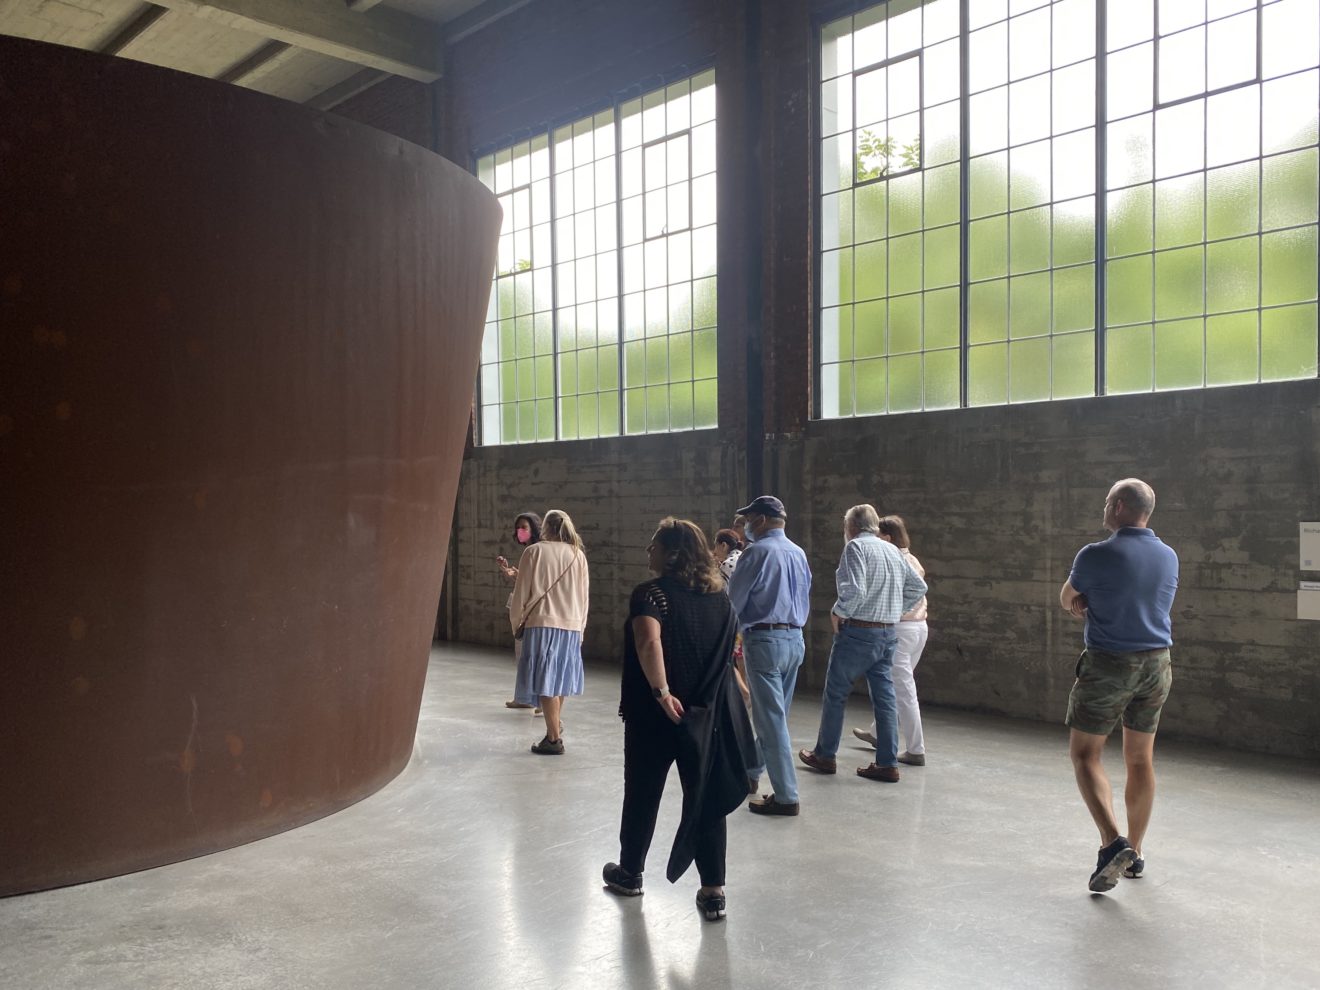 2022 Trip to Dia Beacon Featured Artist: Richard Serra